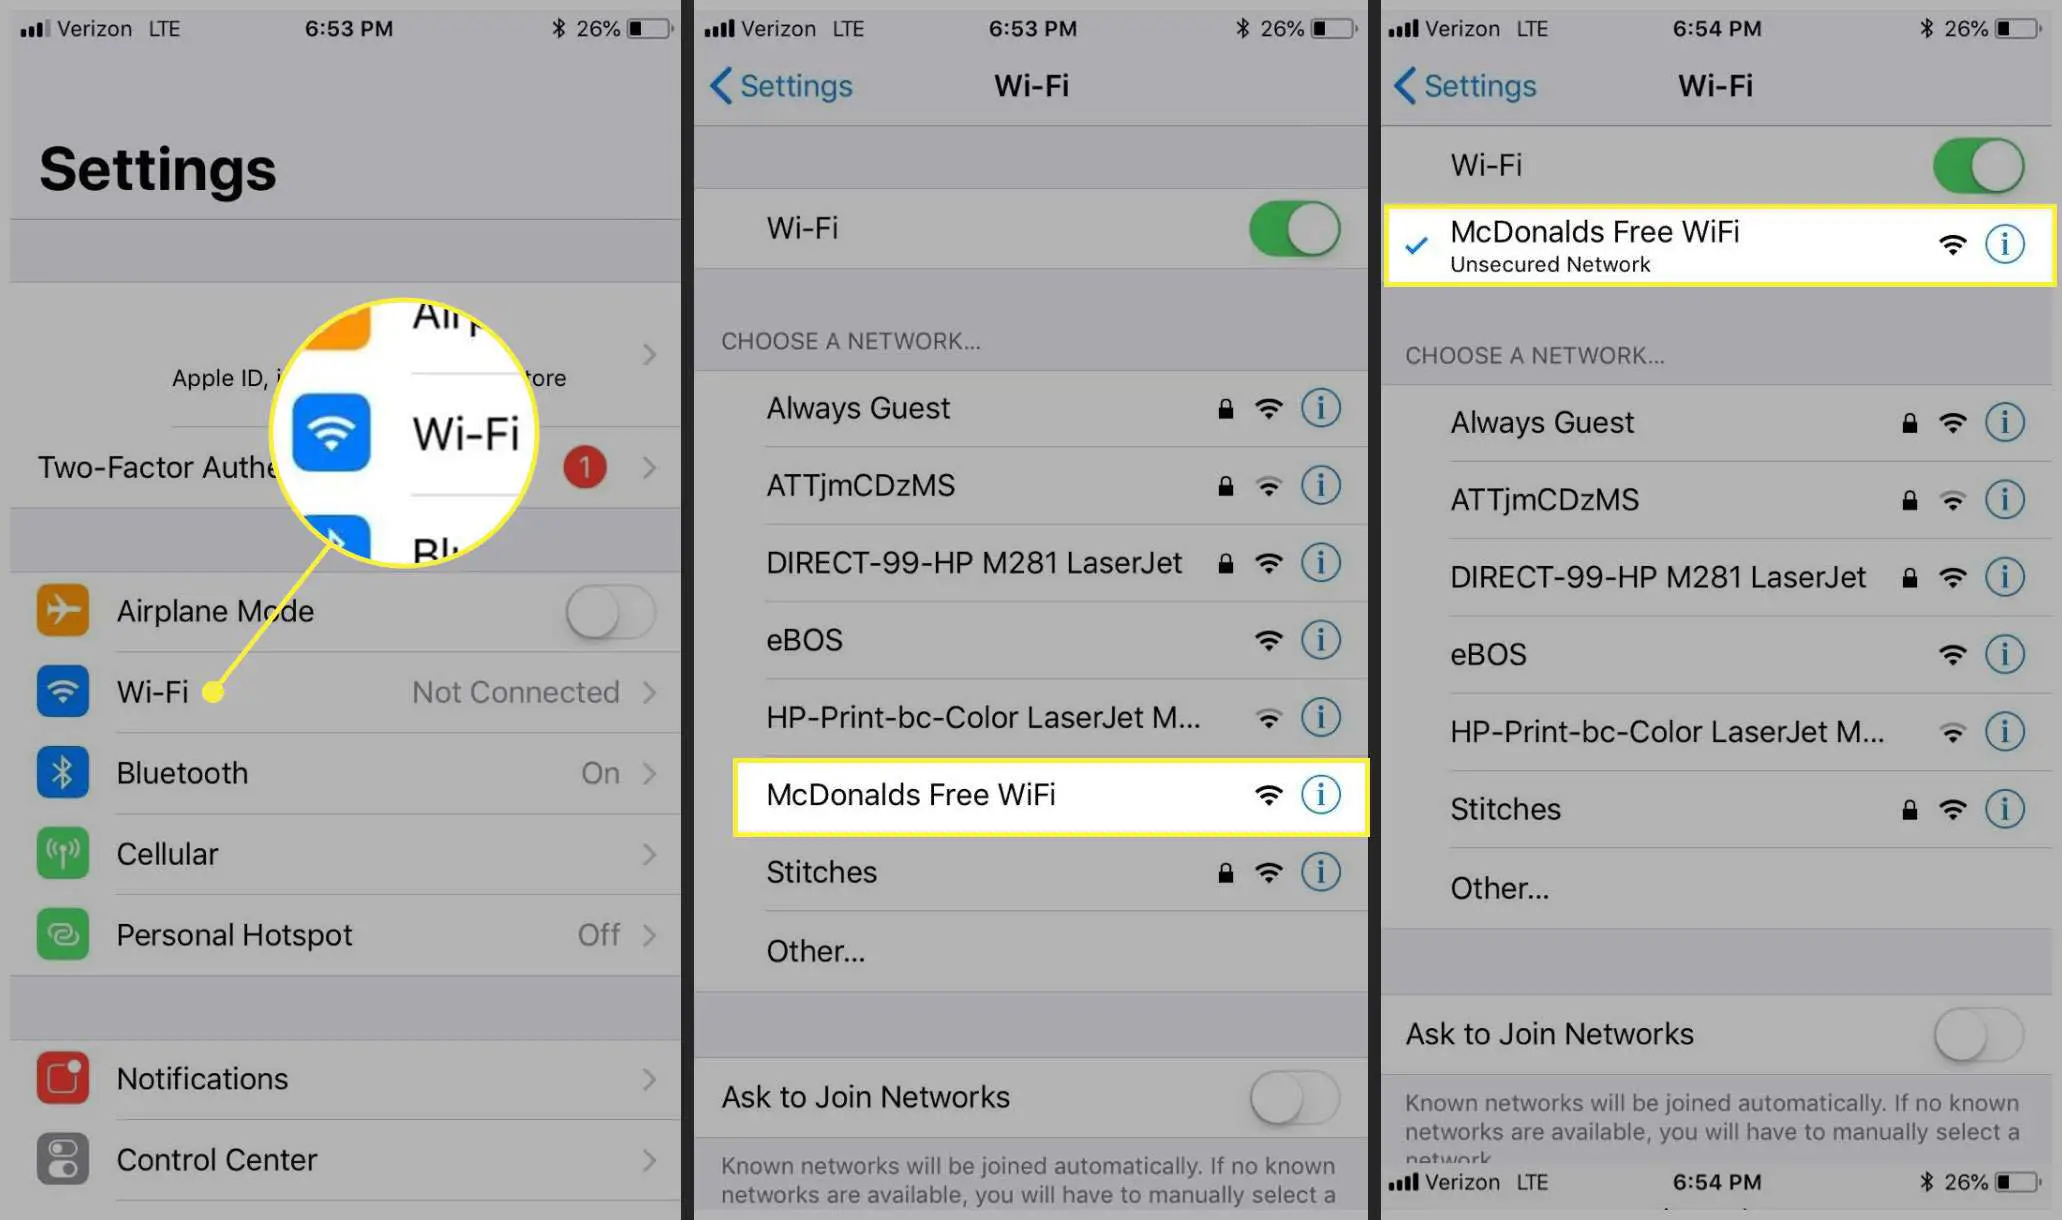 Conectando-se ao Wi-Fi gratuito do McDonald's no iOS